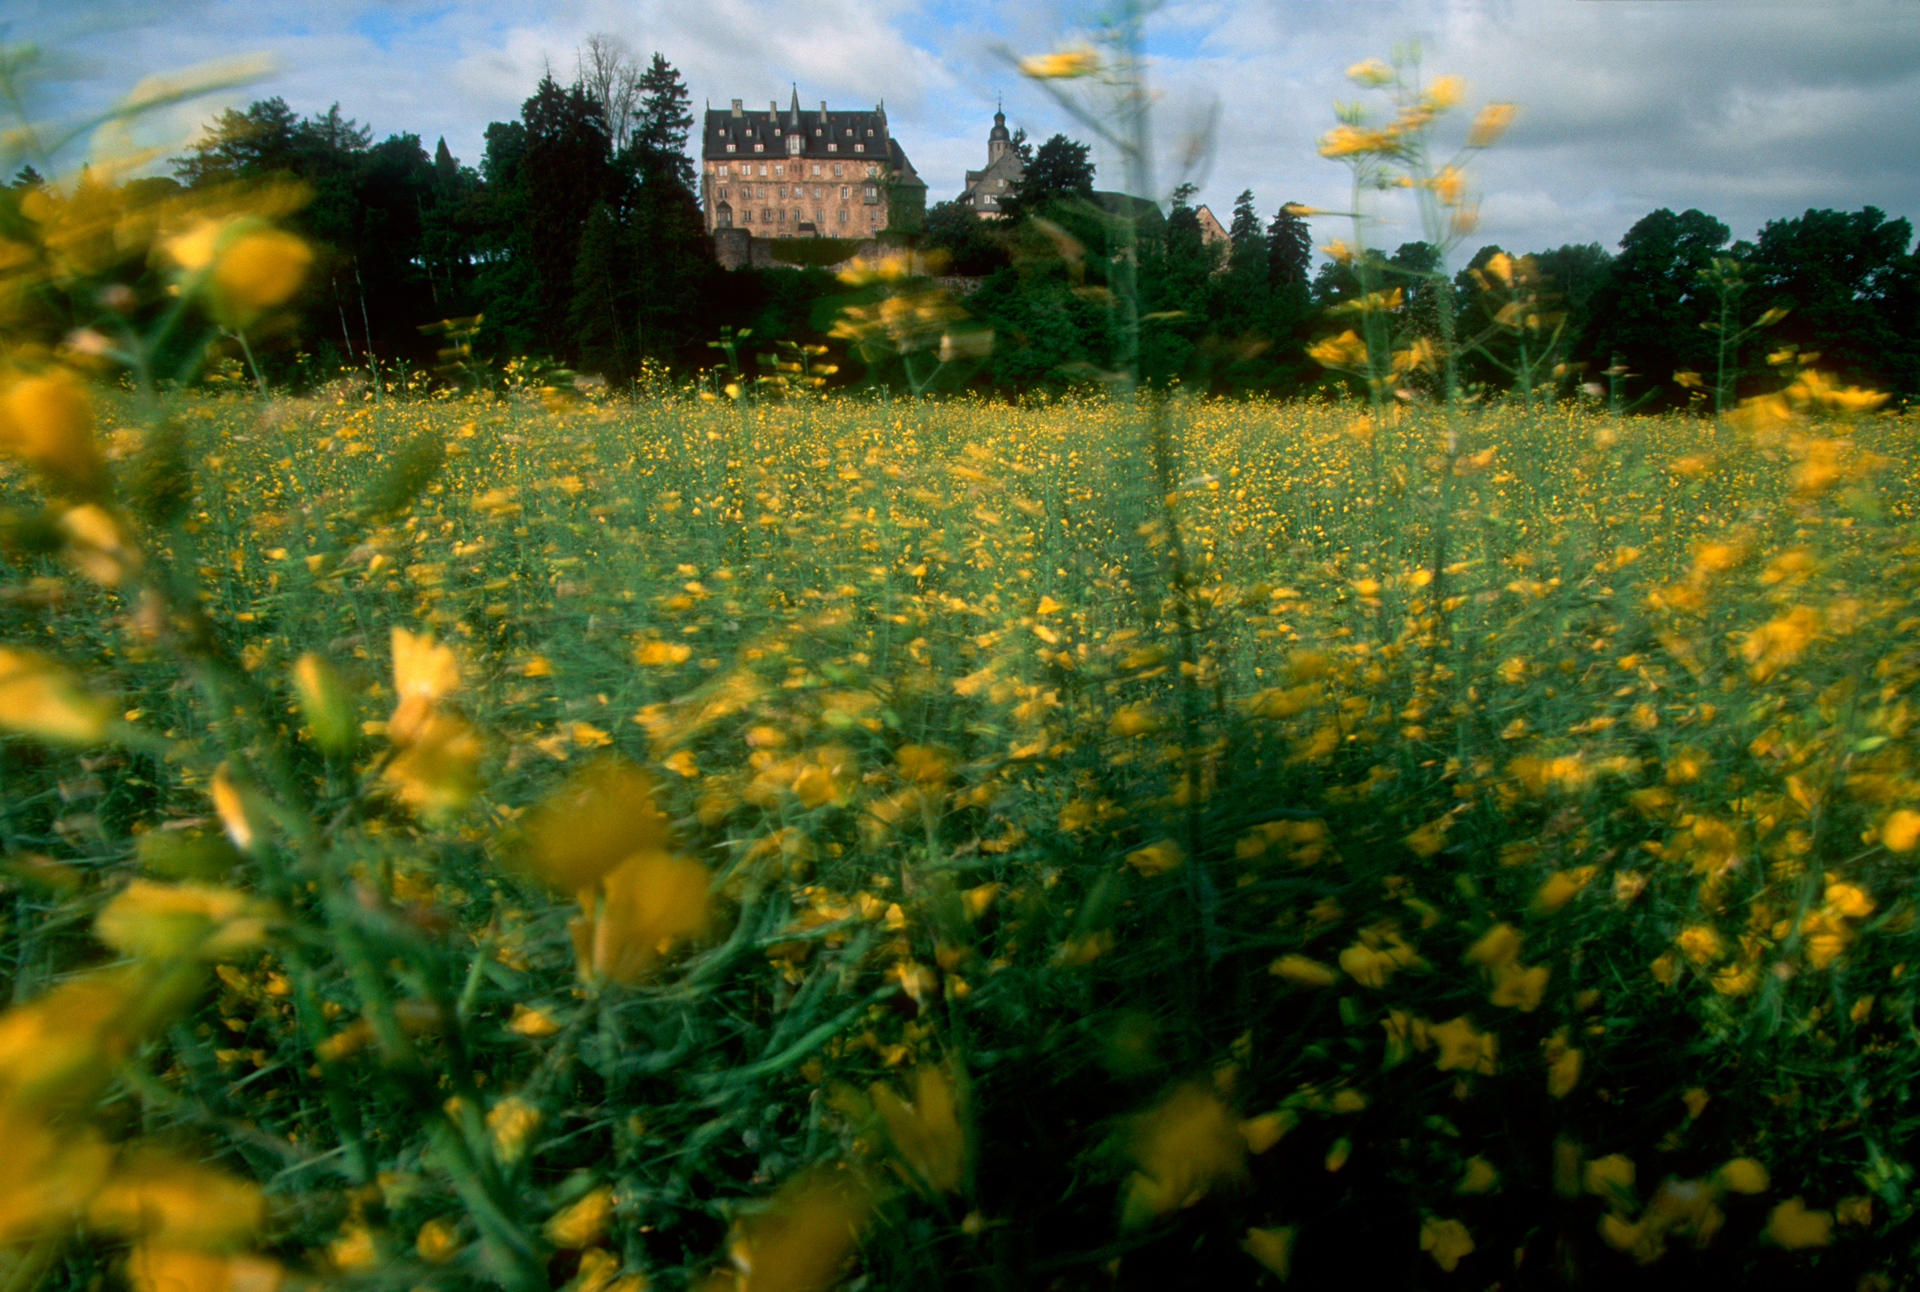  Blossoms fill the fields around Eisenbach Castle.  Eisenbach castle, Lauterbach, Germany  